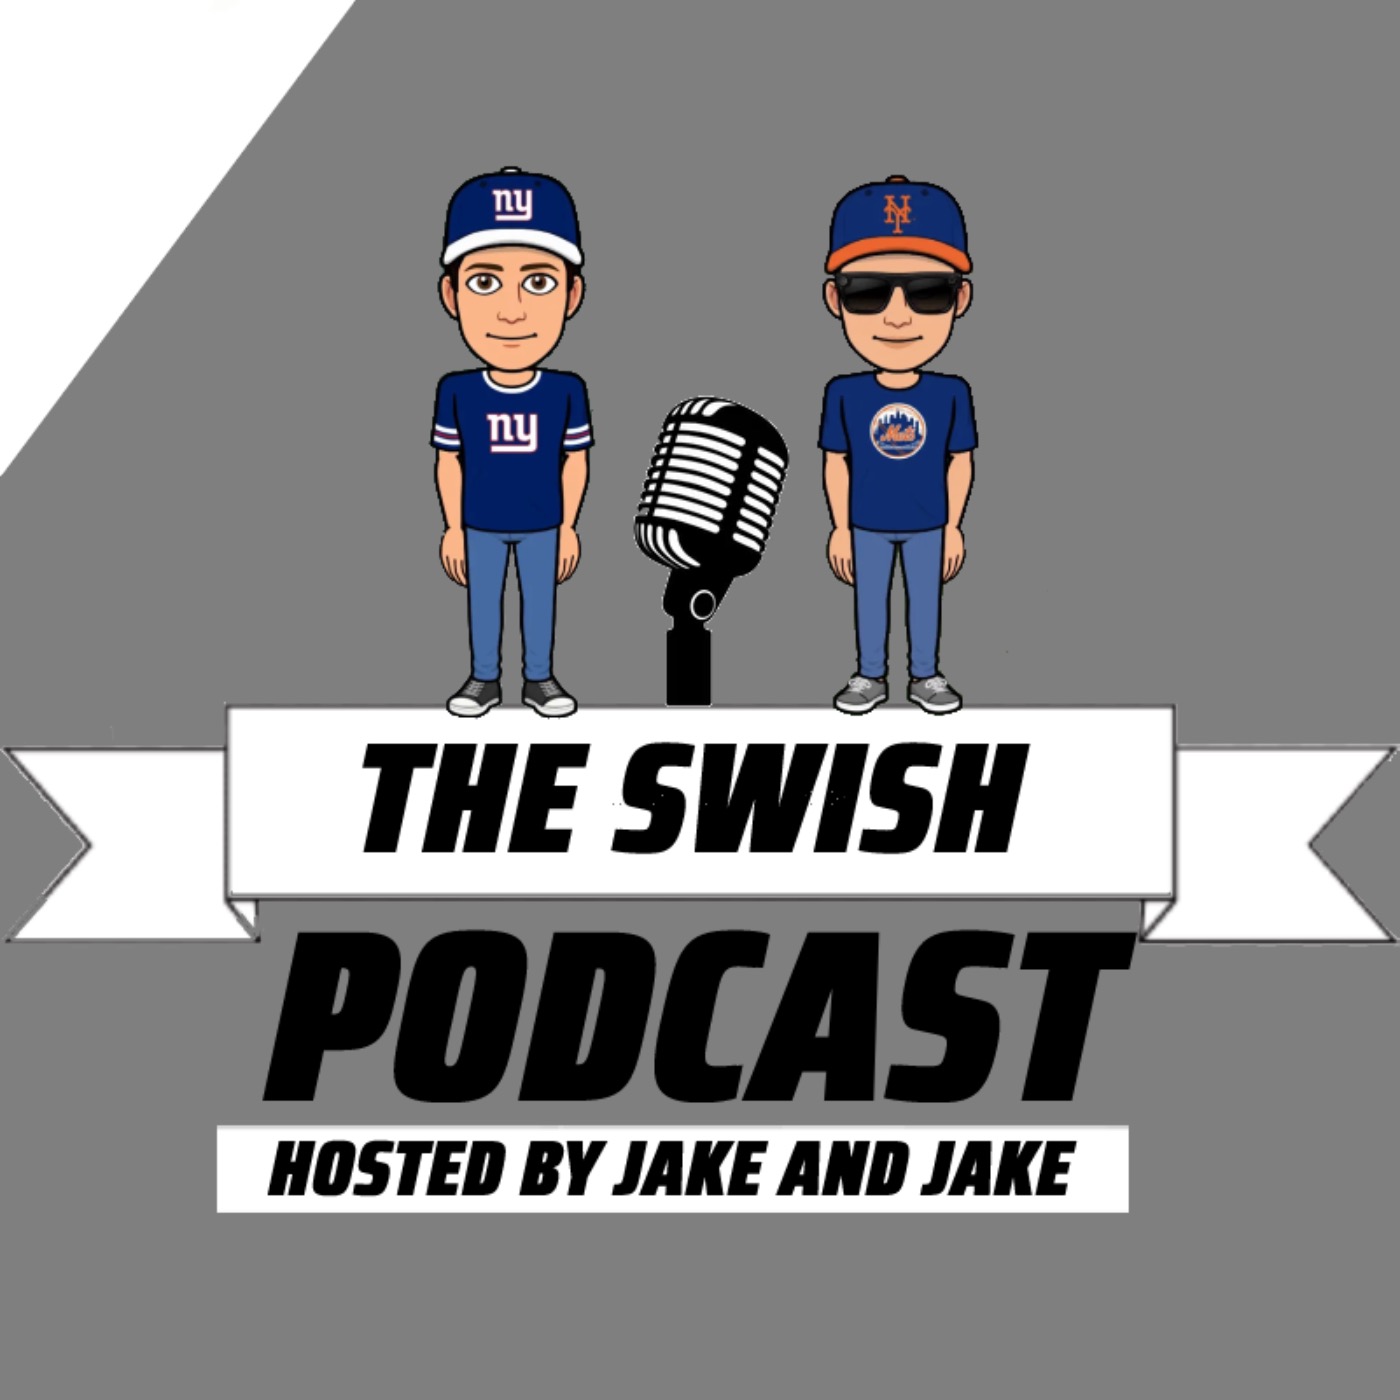 The Swish Podcast